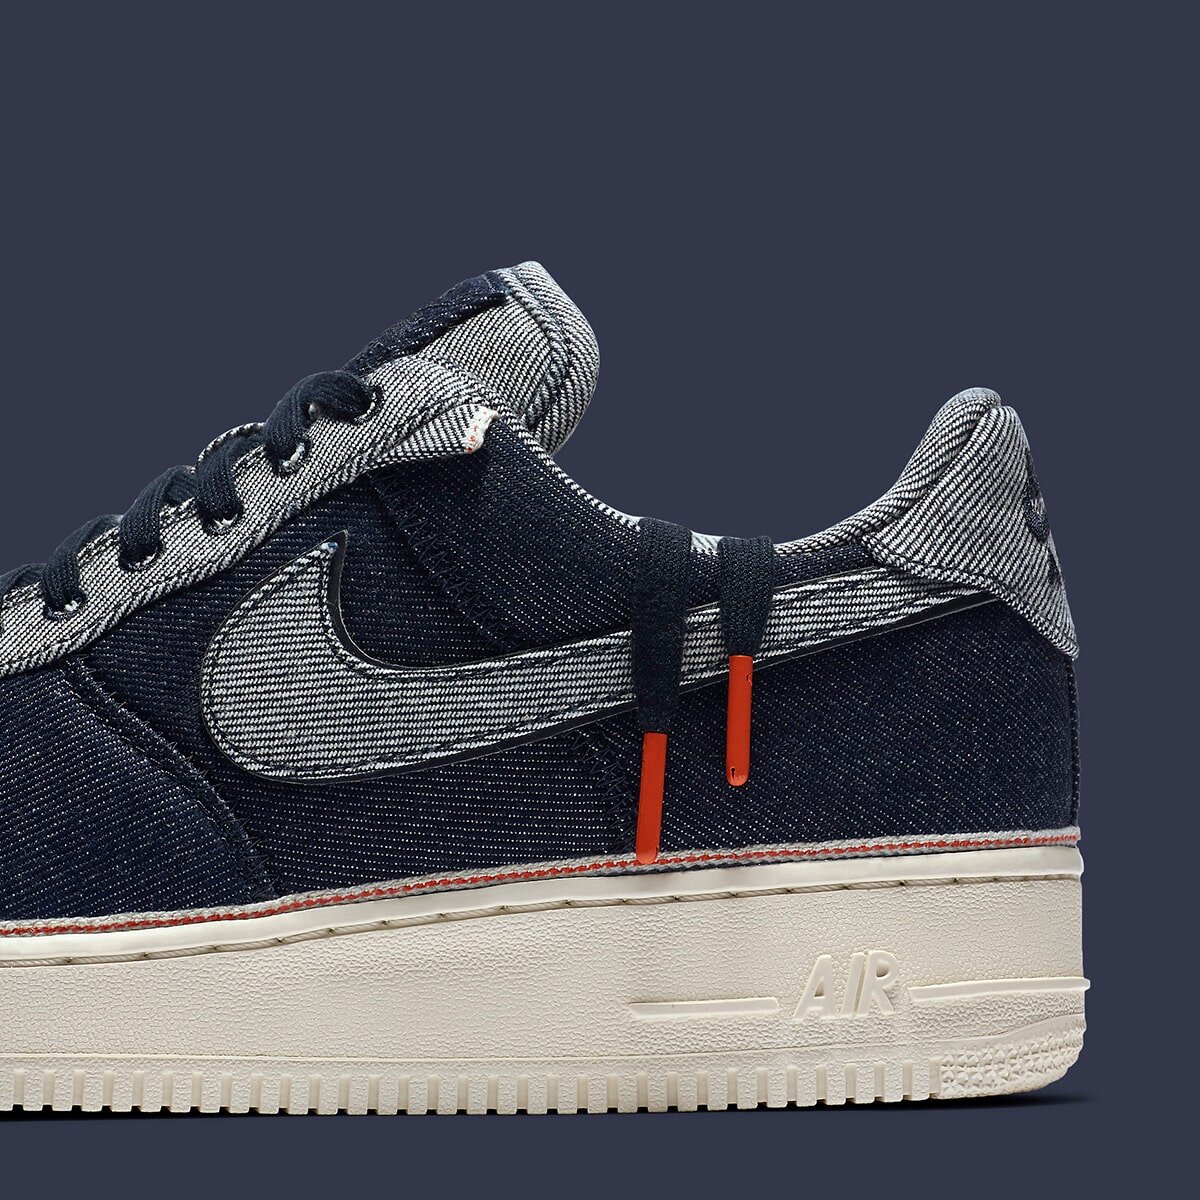 On Sale: Nike Air Force 1 Low Denim "Raw Indigo" — Sneaker Shouts